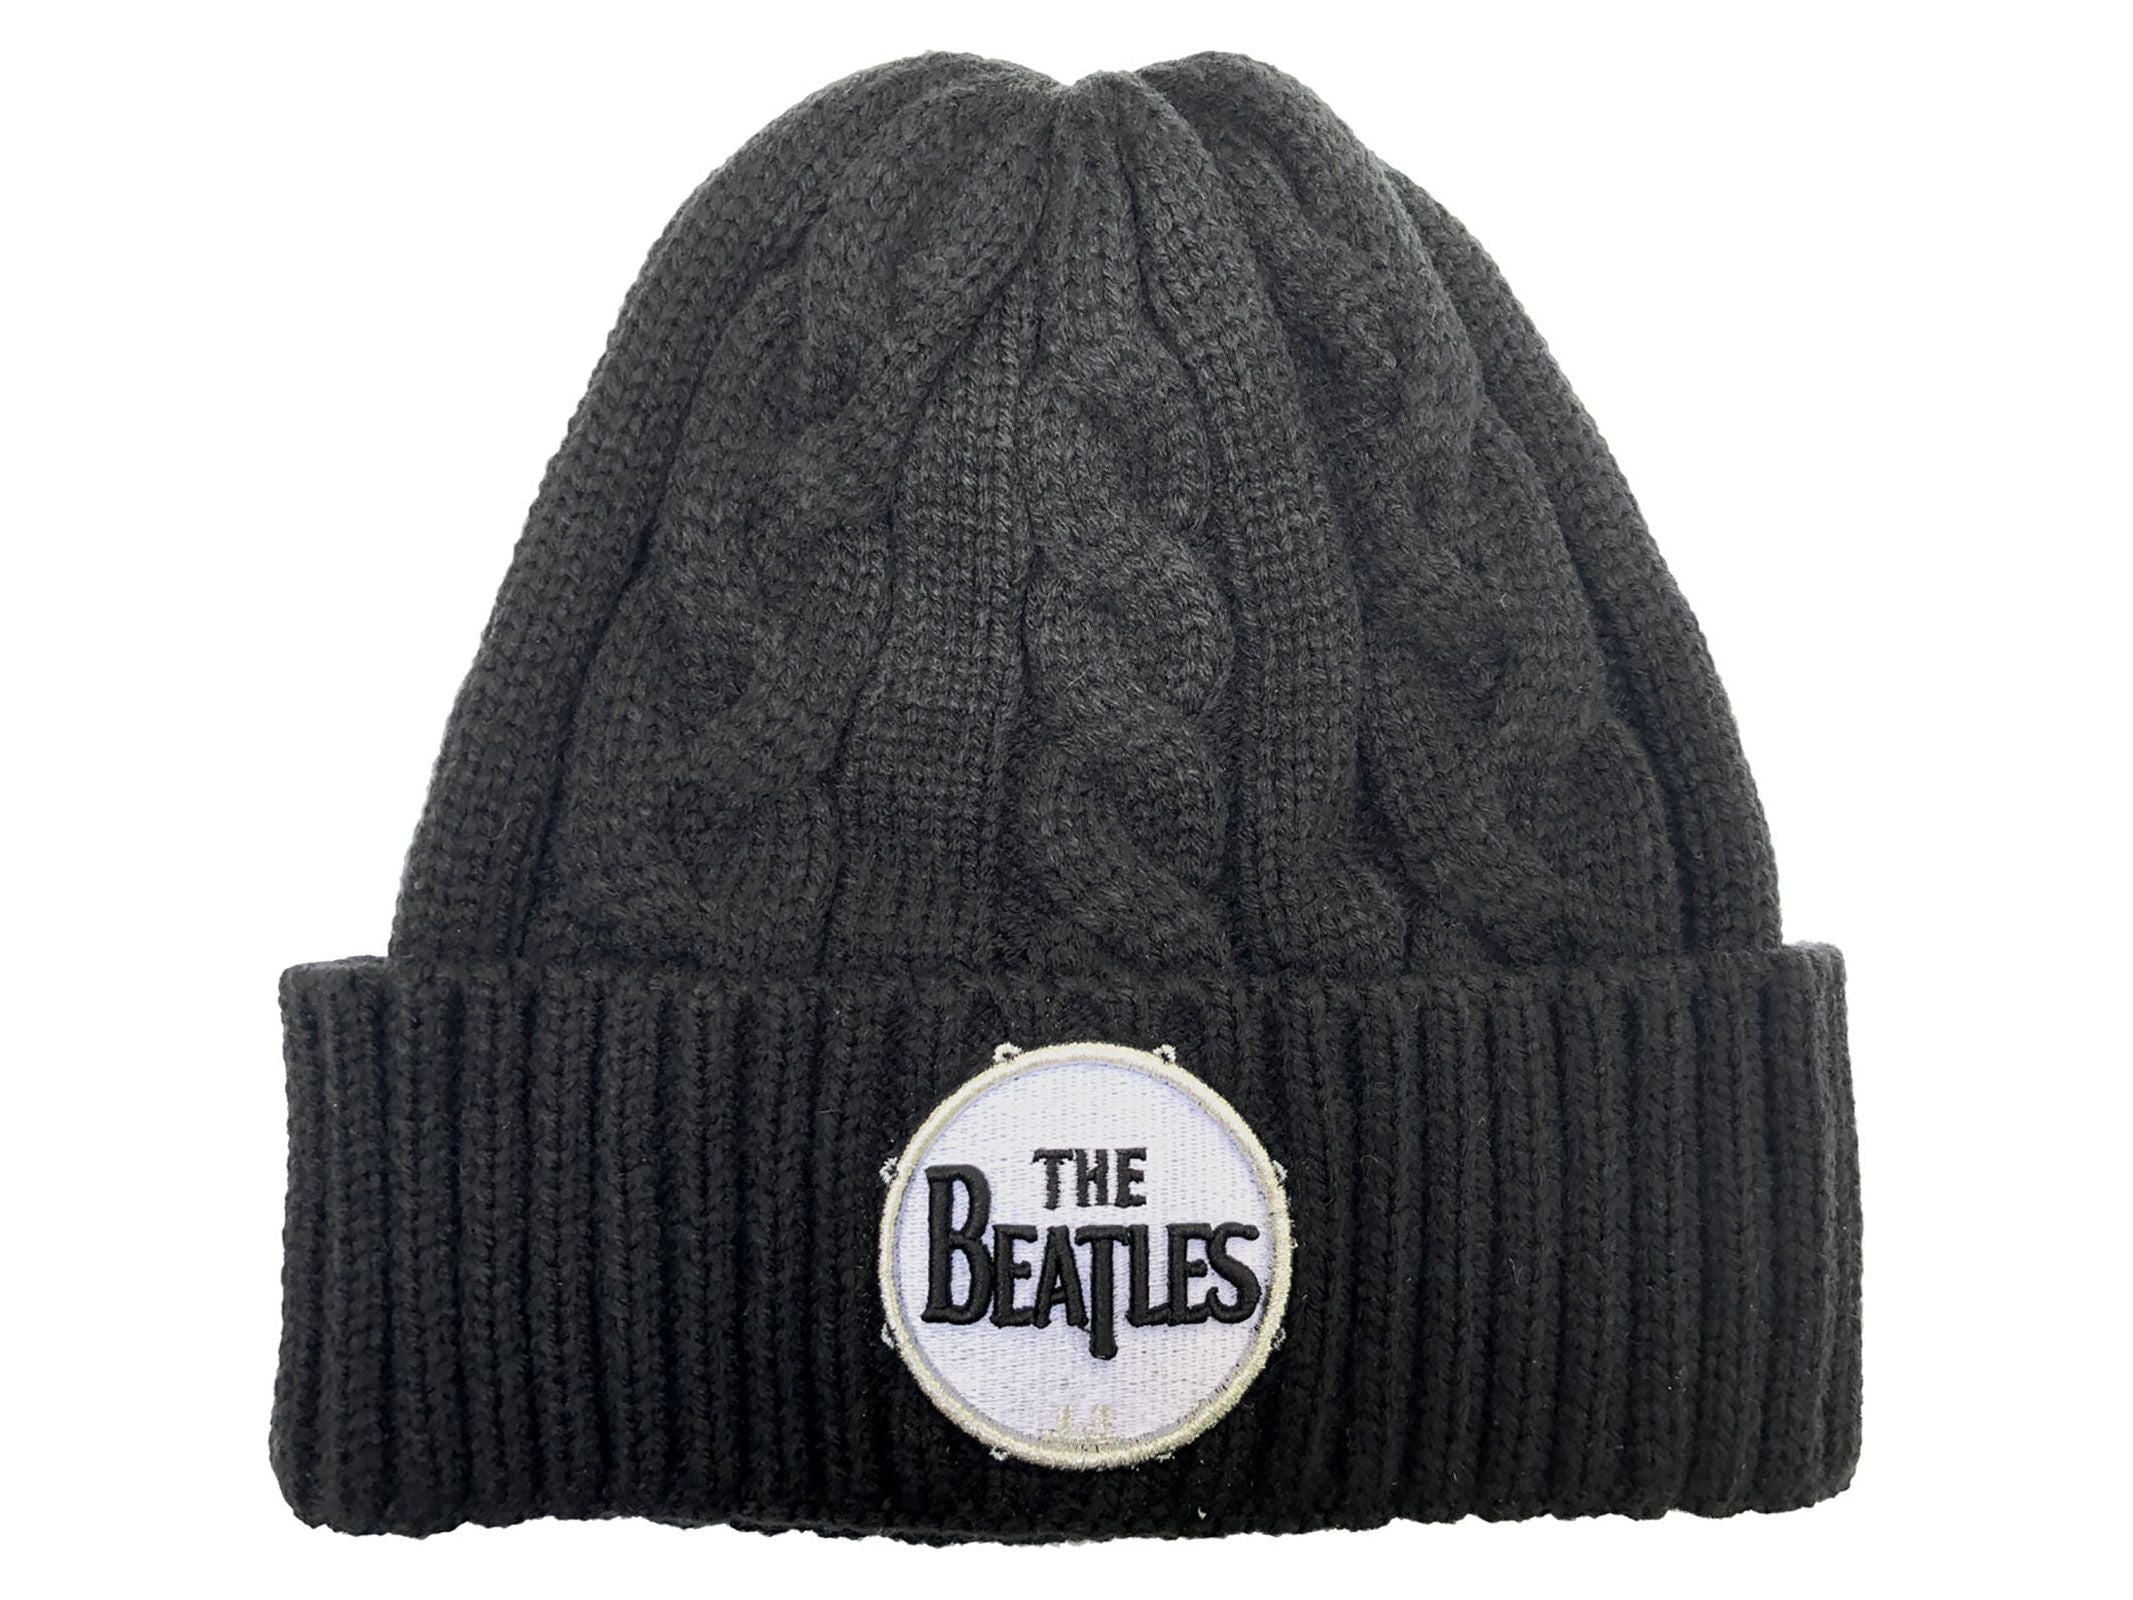 Beatles Beanie Hat Featuring The Beatles 'Drum Logo'